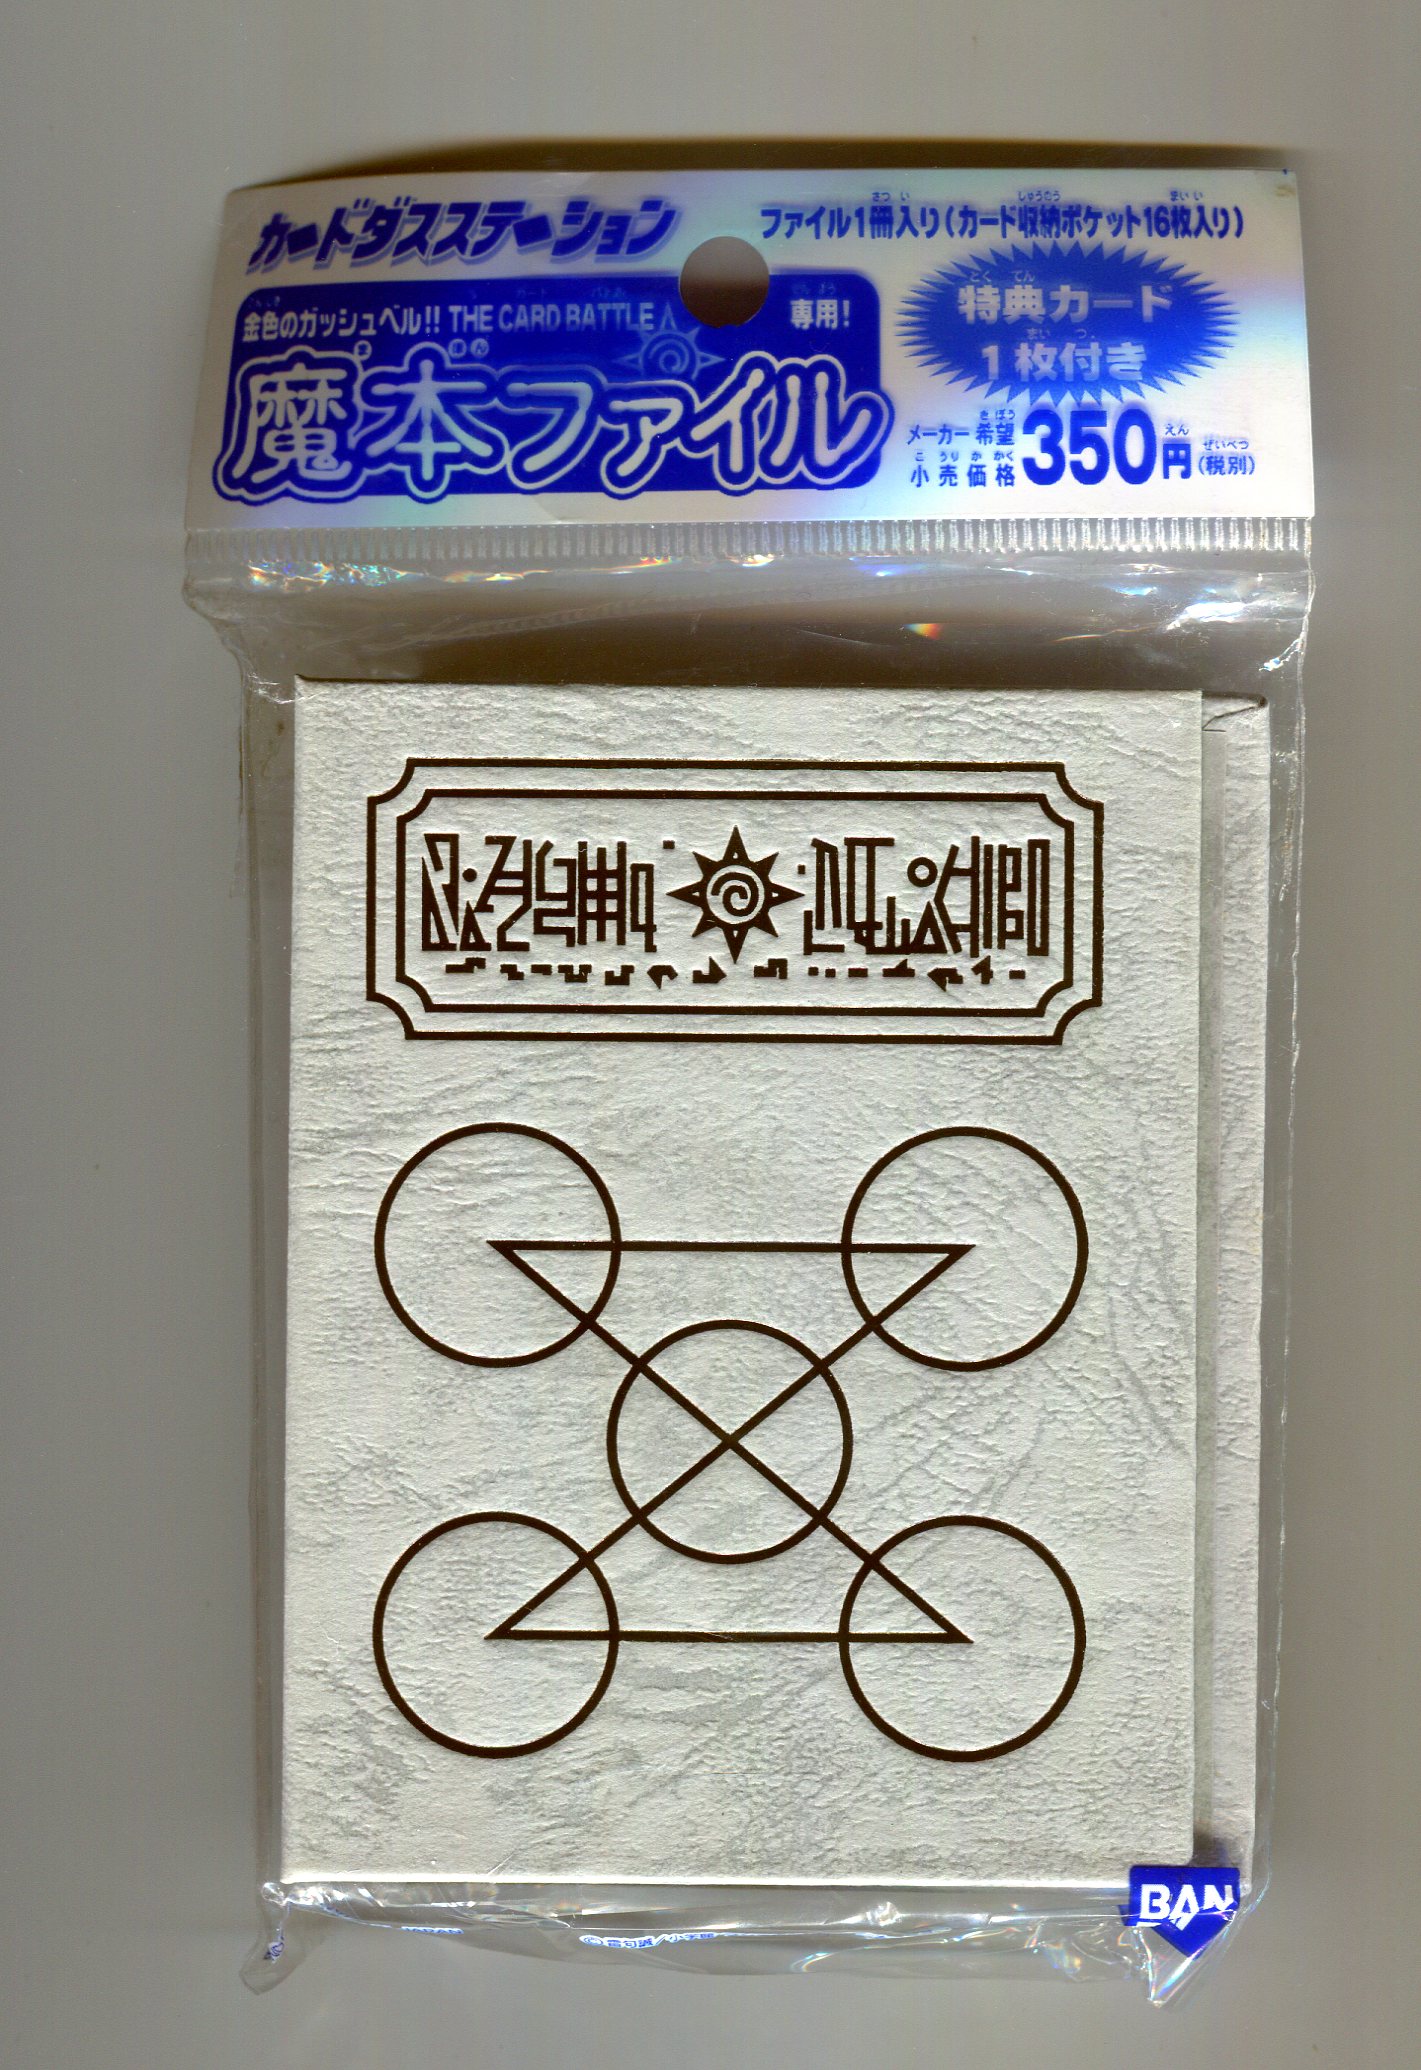 BANDAI 金色のガッシュベル!!THE CARD BATTLE 魔本ファイル【灰色